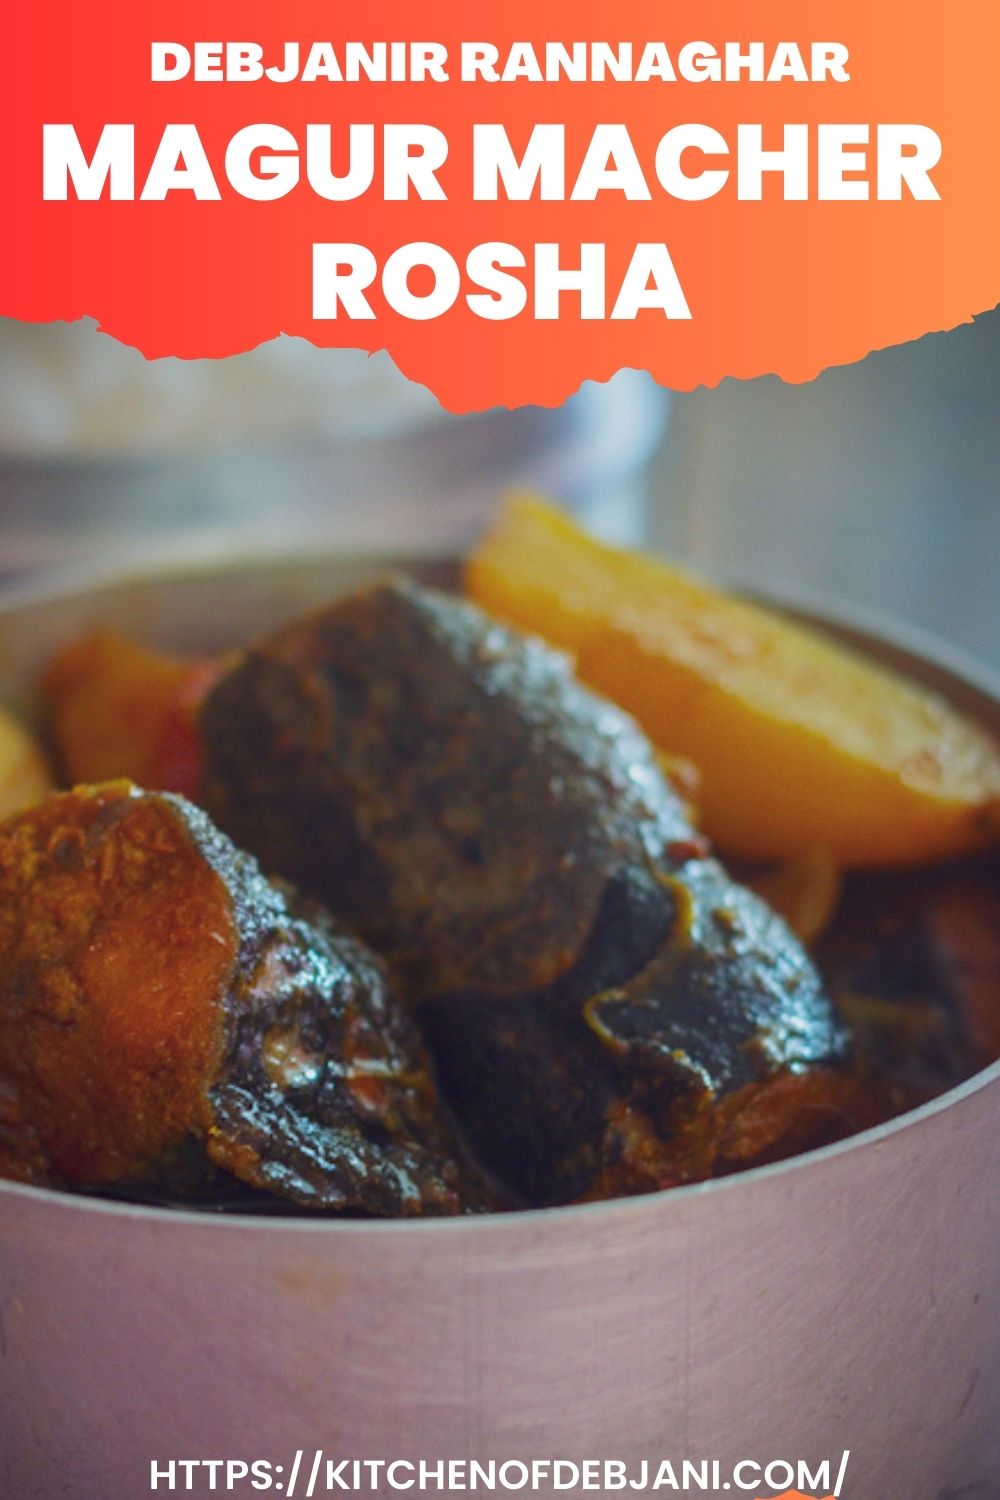 %Magur Maacher Rosha recipe Photo Food Pinterest Pin